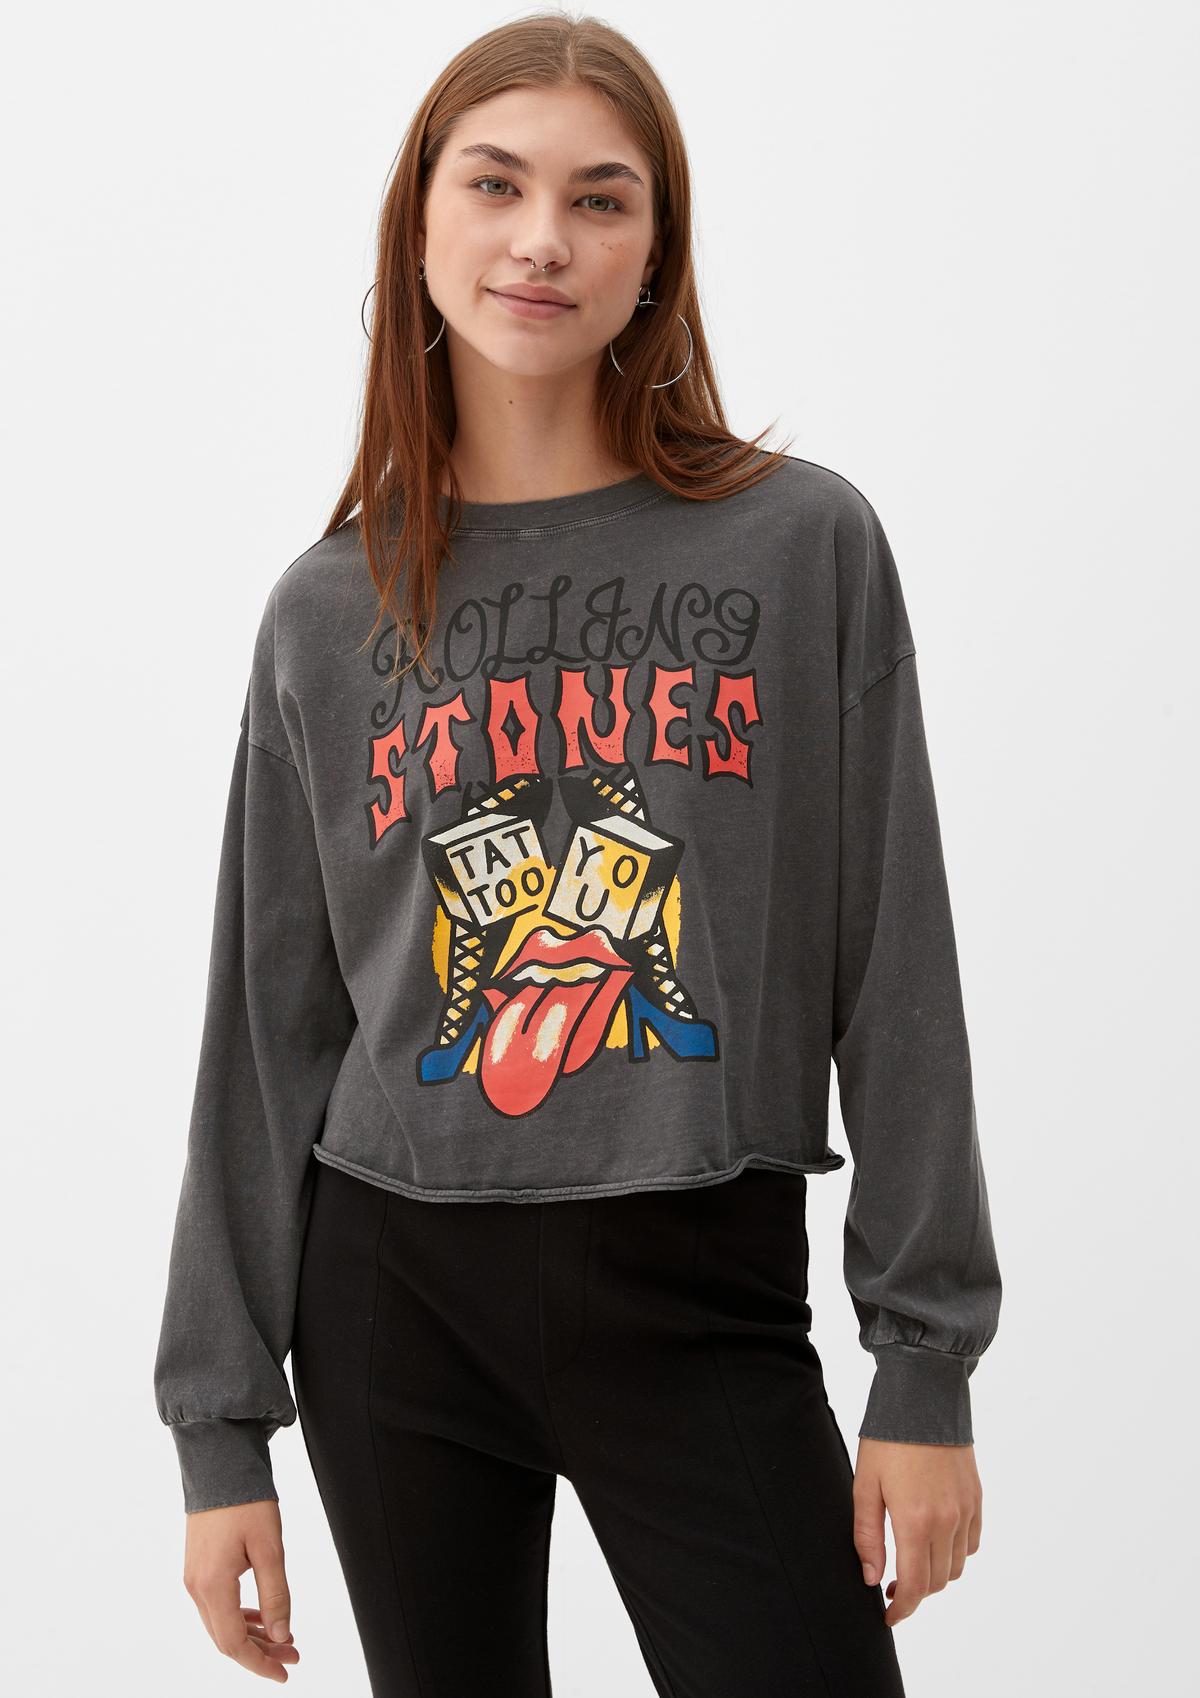 s.Oliver Shirt mit Rolling-Stones-Print